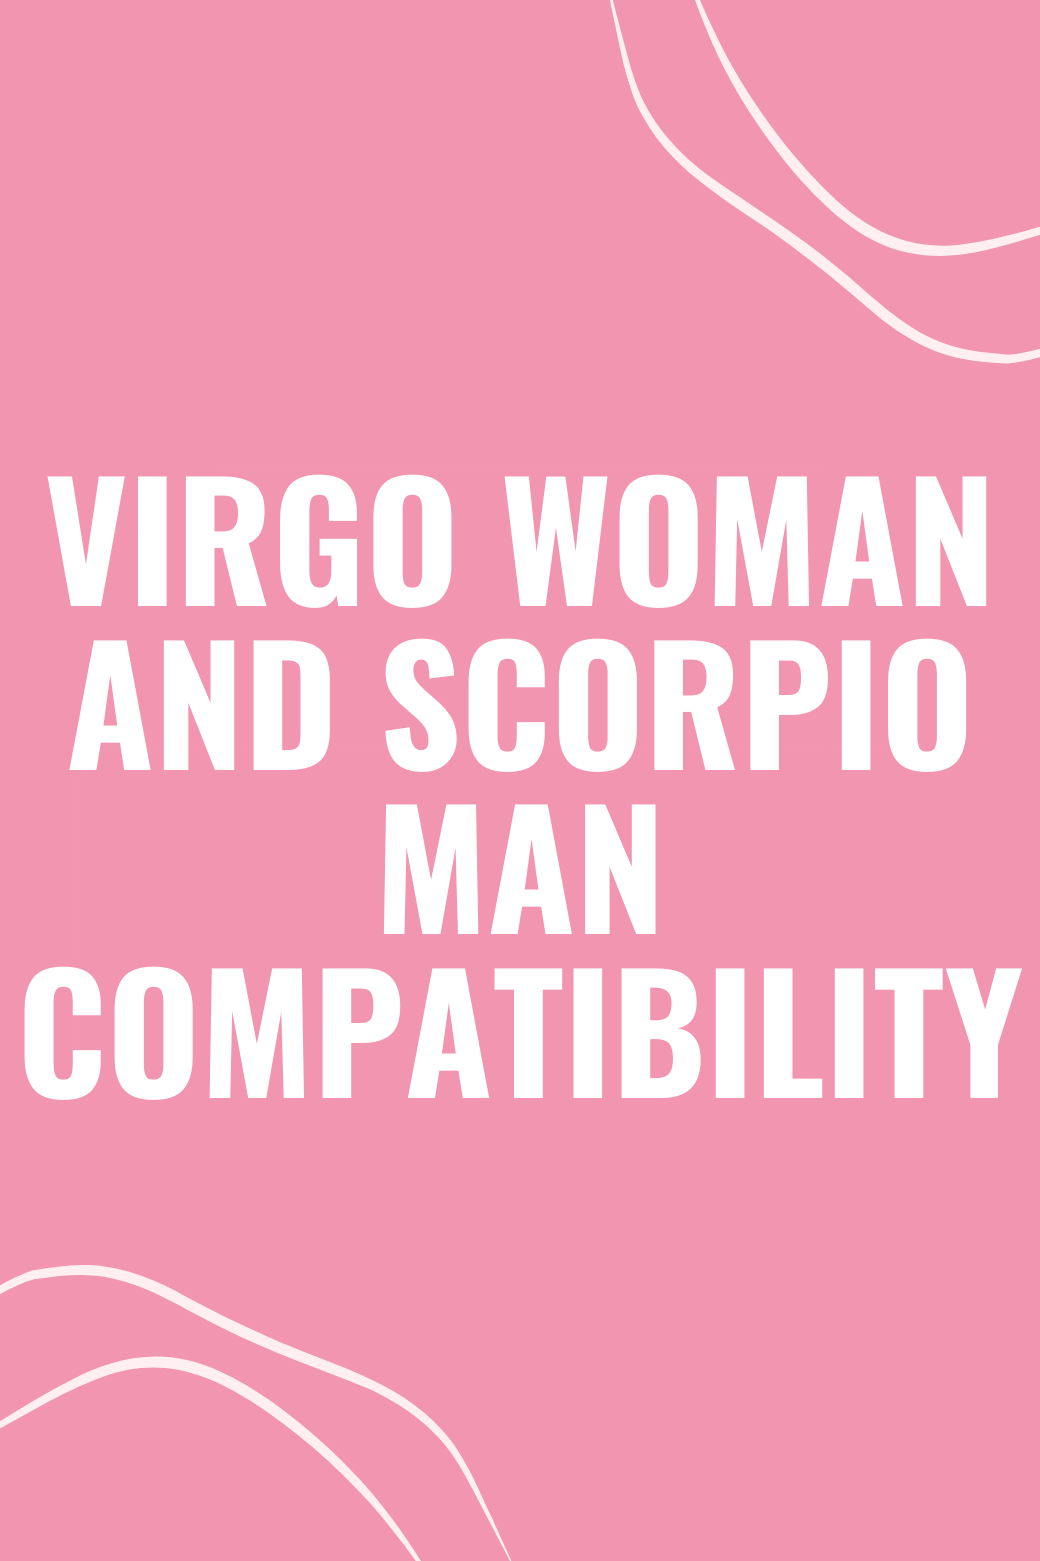 Virgo Woman and Scorpio Man Compatibility